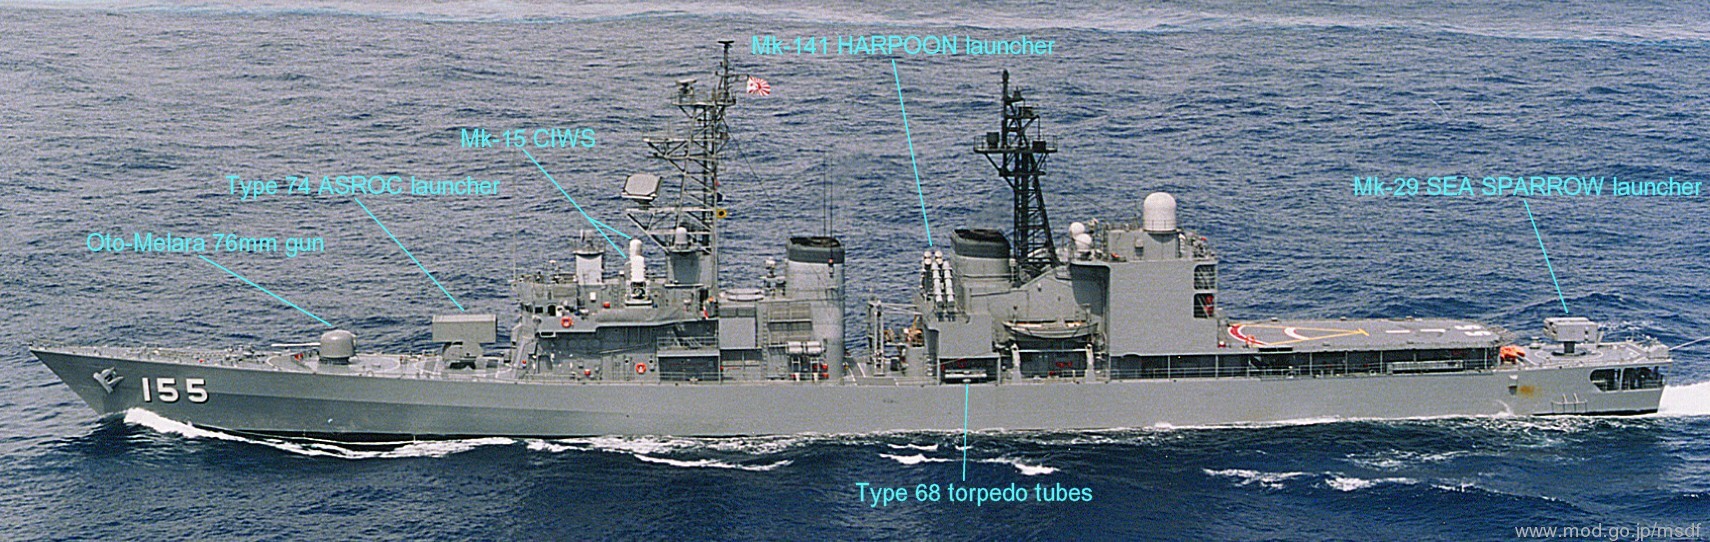 asagiri class destroyer jmsdf armament oto melara 76/62 gun type-74 asroc rur-5 mk-15 ciws mk-141 rgm-84 harpoon ssm mk-29 missile launcher rim-7 sea sparrow sam torpedo tubes type-68 mk-32 002